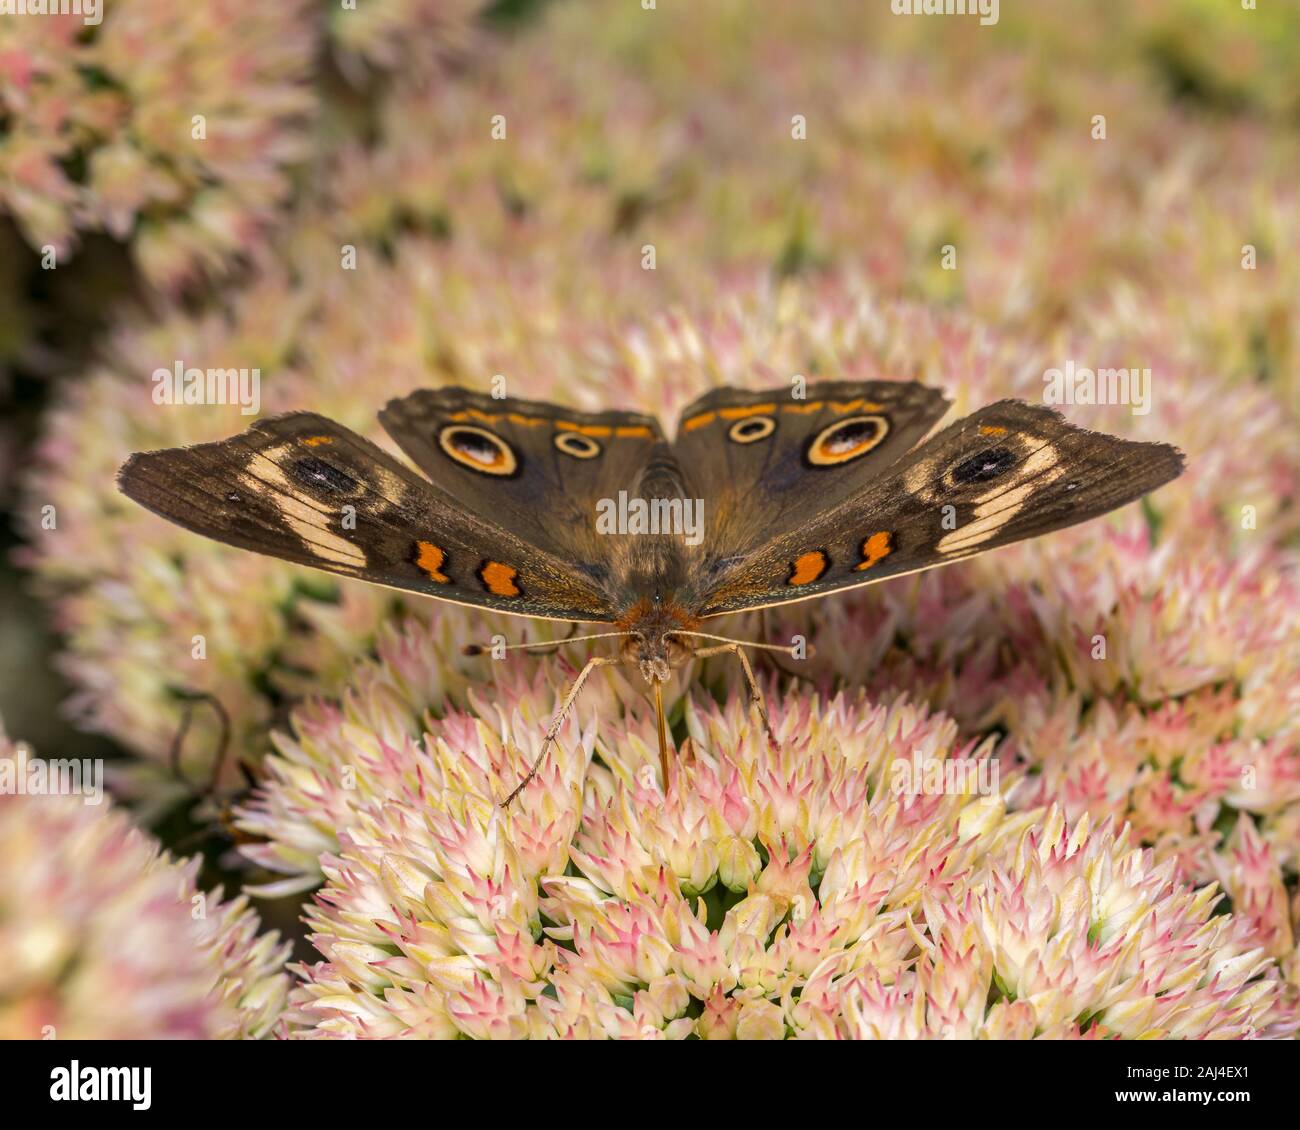 Acercamiento de Buckeye común mariposa alimentándose de néctar de sedum stonecrops planta en patio jardín de flores Foto de stock